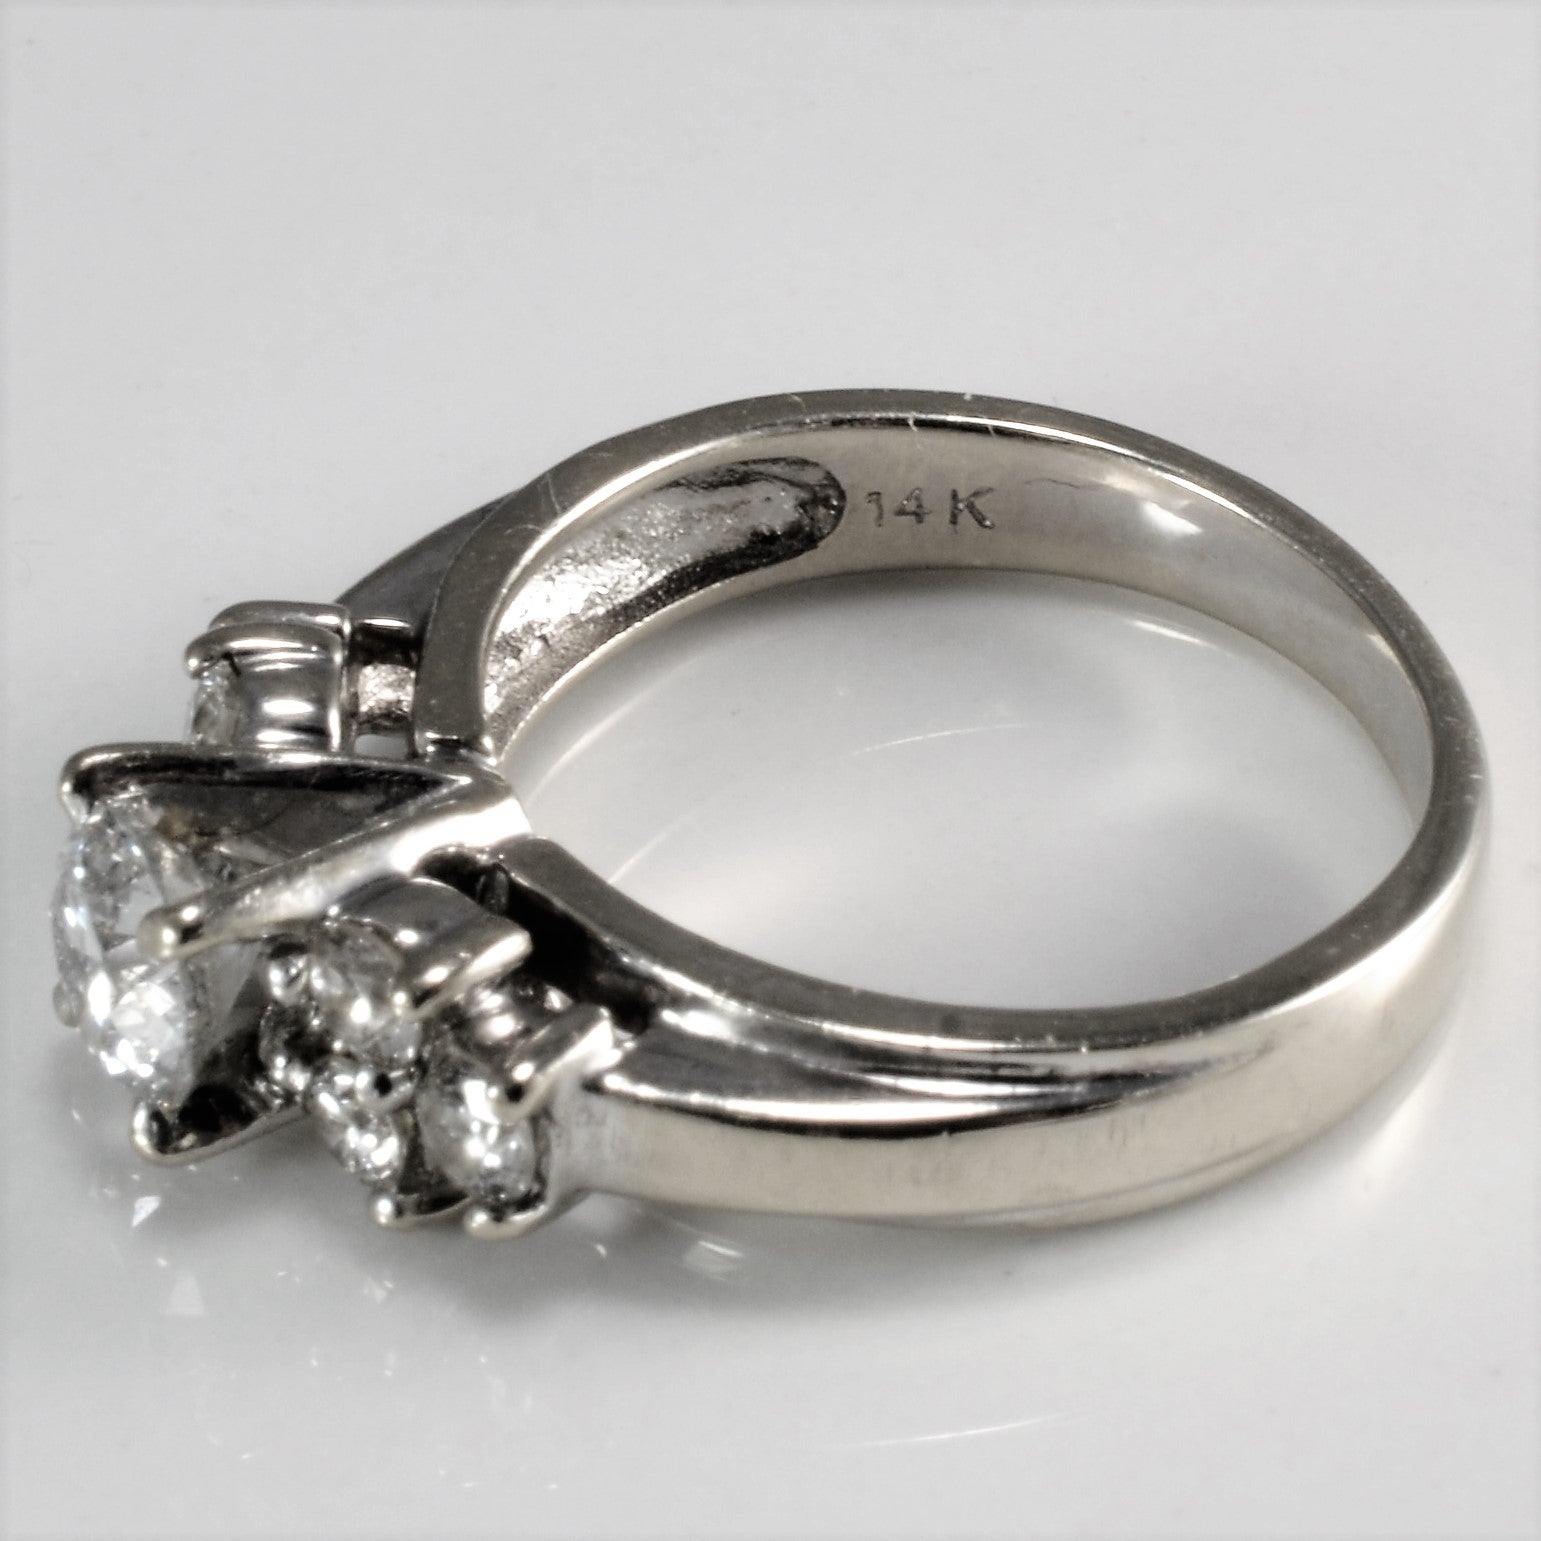 High Set Cluster Diamond Engagement Ring | 0.91 ctw, SZ 5.75 |